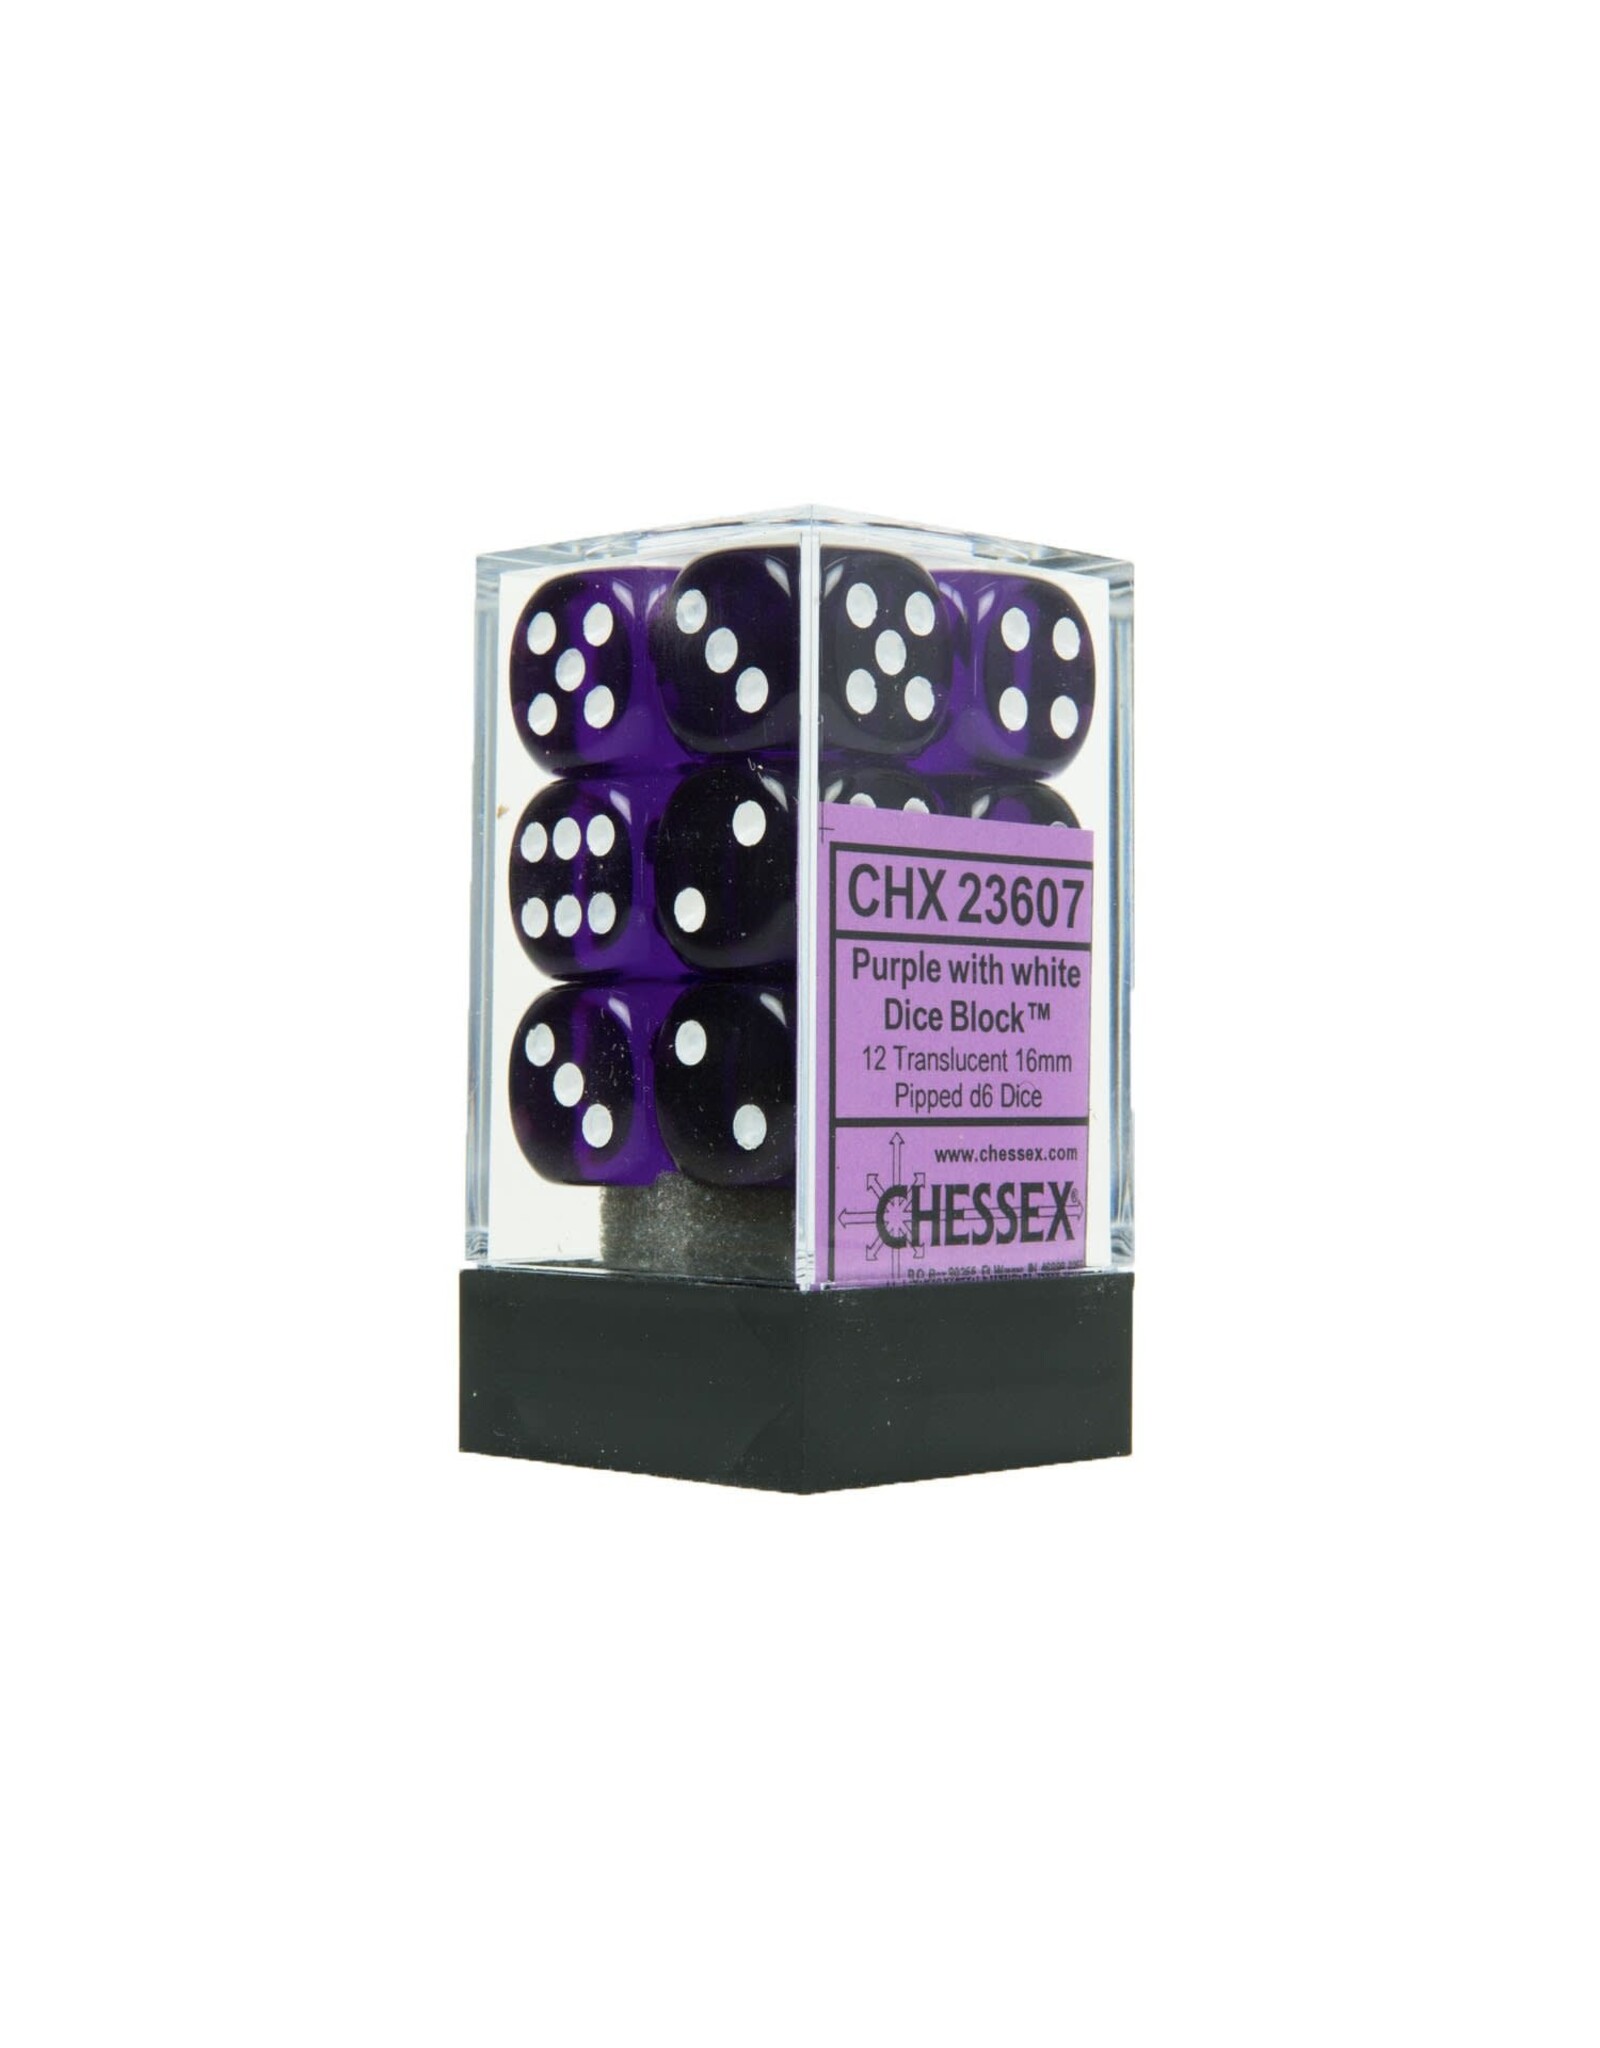 Chessex Purple/white Translucent 16mm D6 dice set